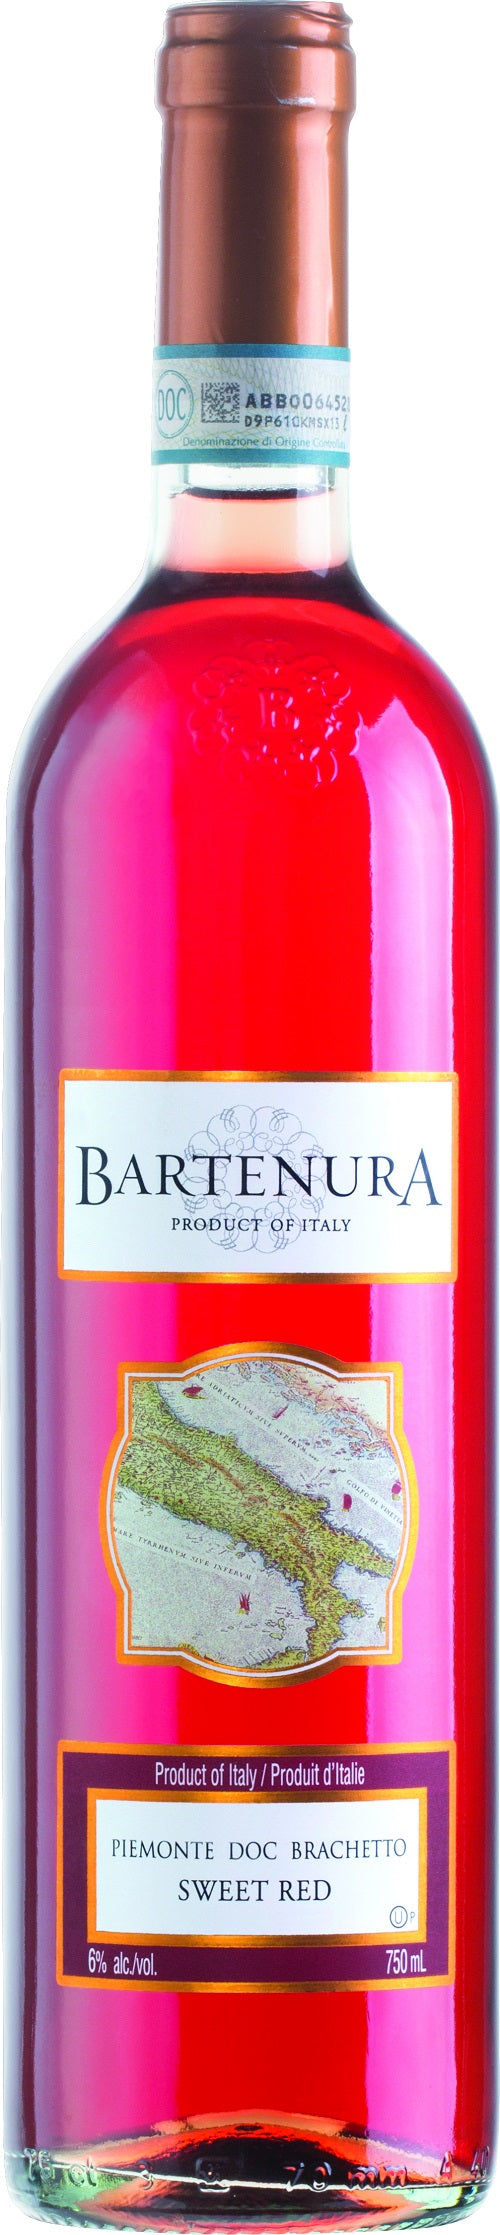 Bartenura Brachetto Sweet Red 2020